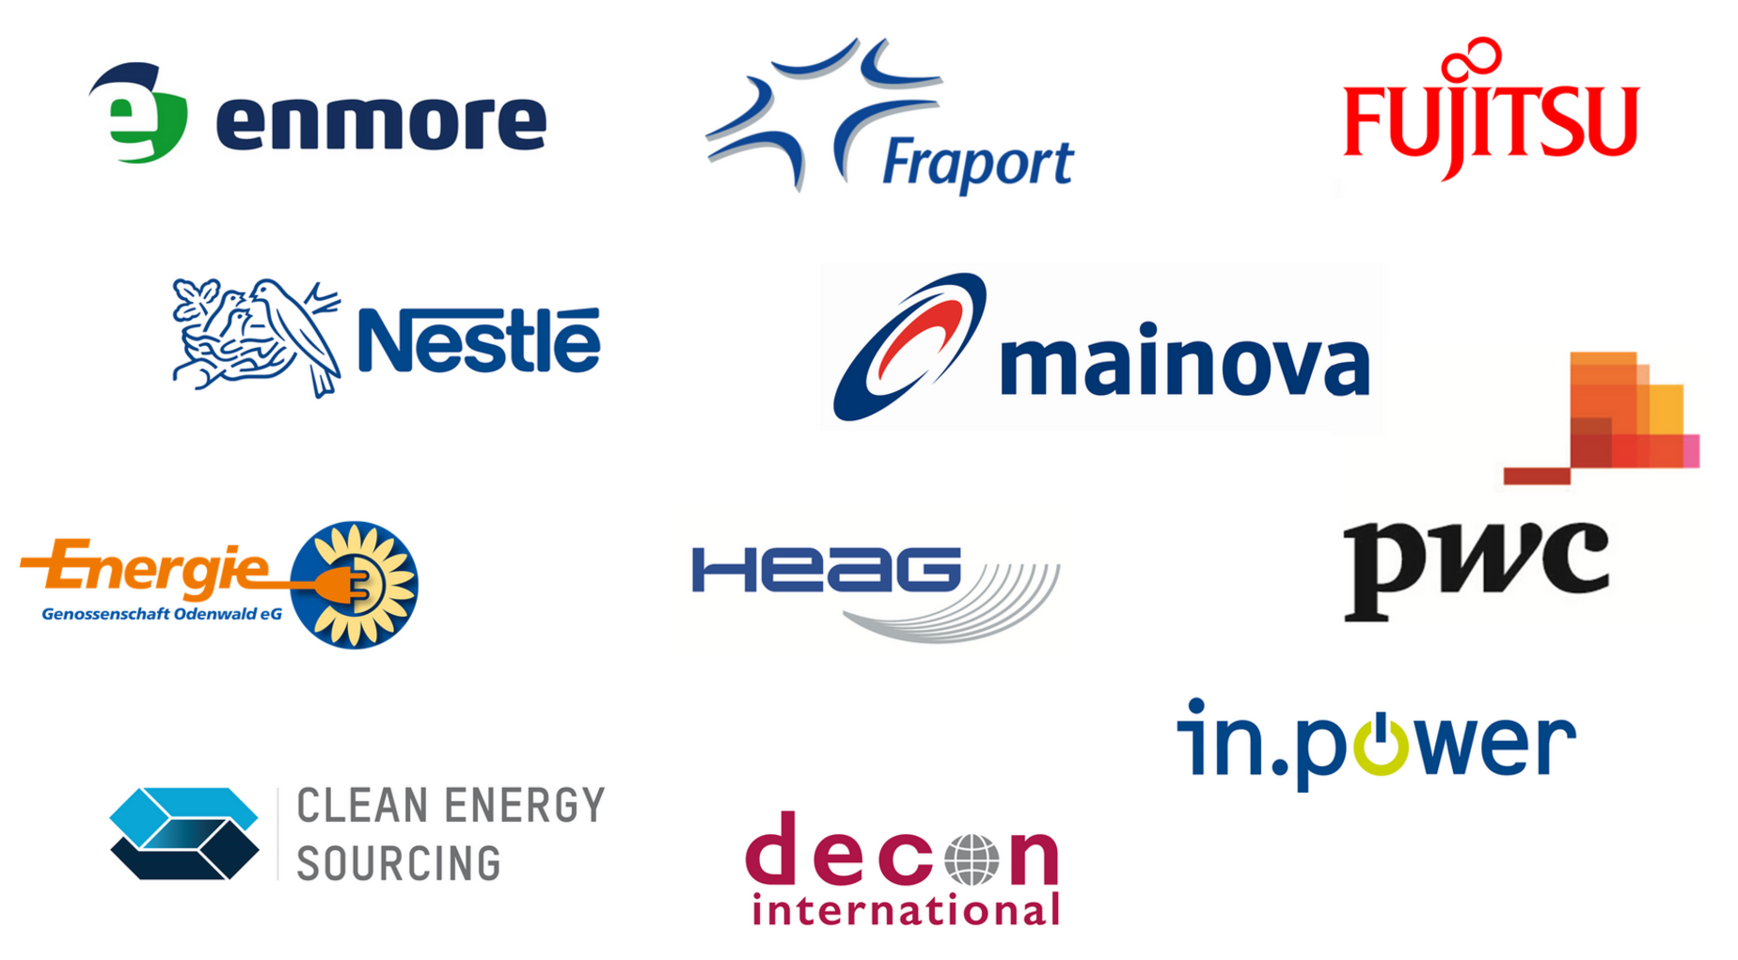 Logos der Kooperationspartner des Studiengangs Energiewirtschaft: enmore, Fraport, Fujitsu, Nestle, mainova, Energiegenossenschaft Odenwald eG, PWC, HEAG, Clean Energy Sourcing, decon international, in.power